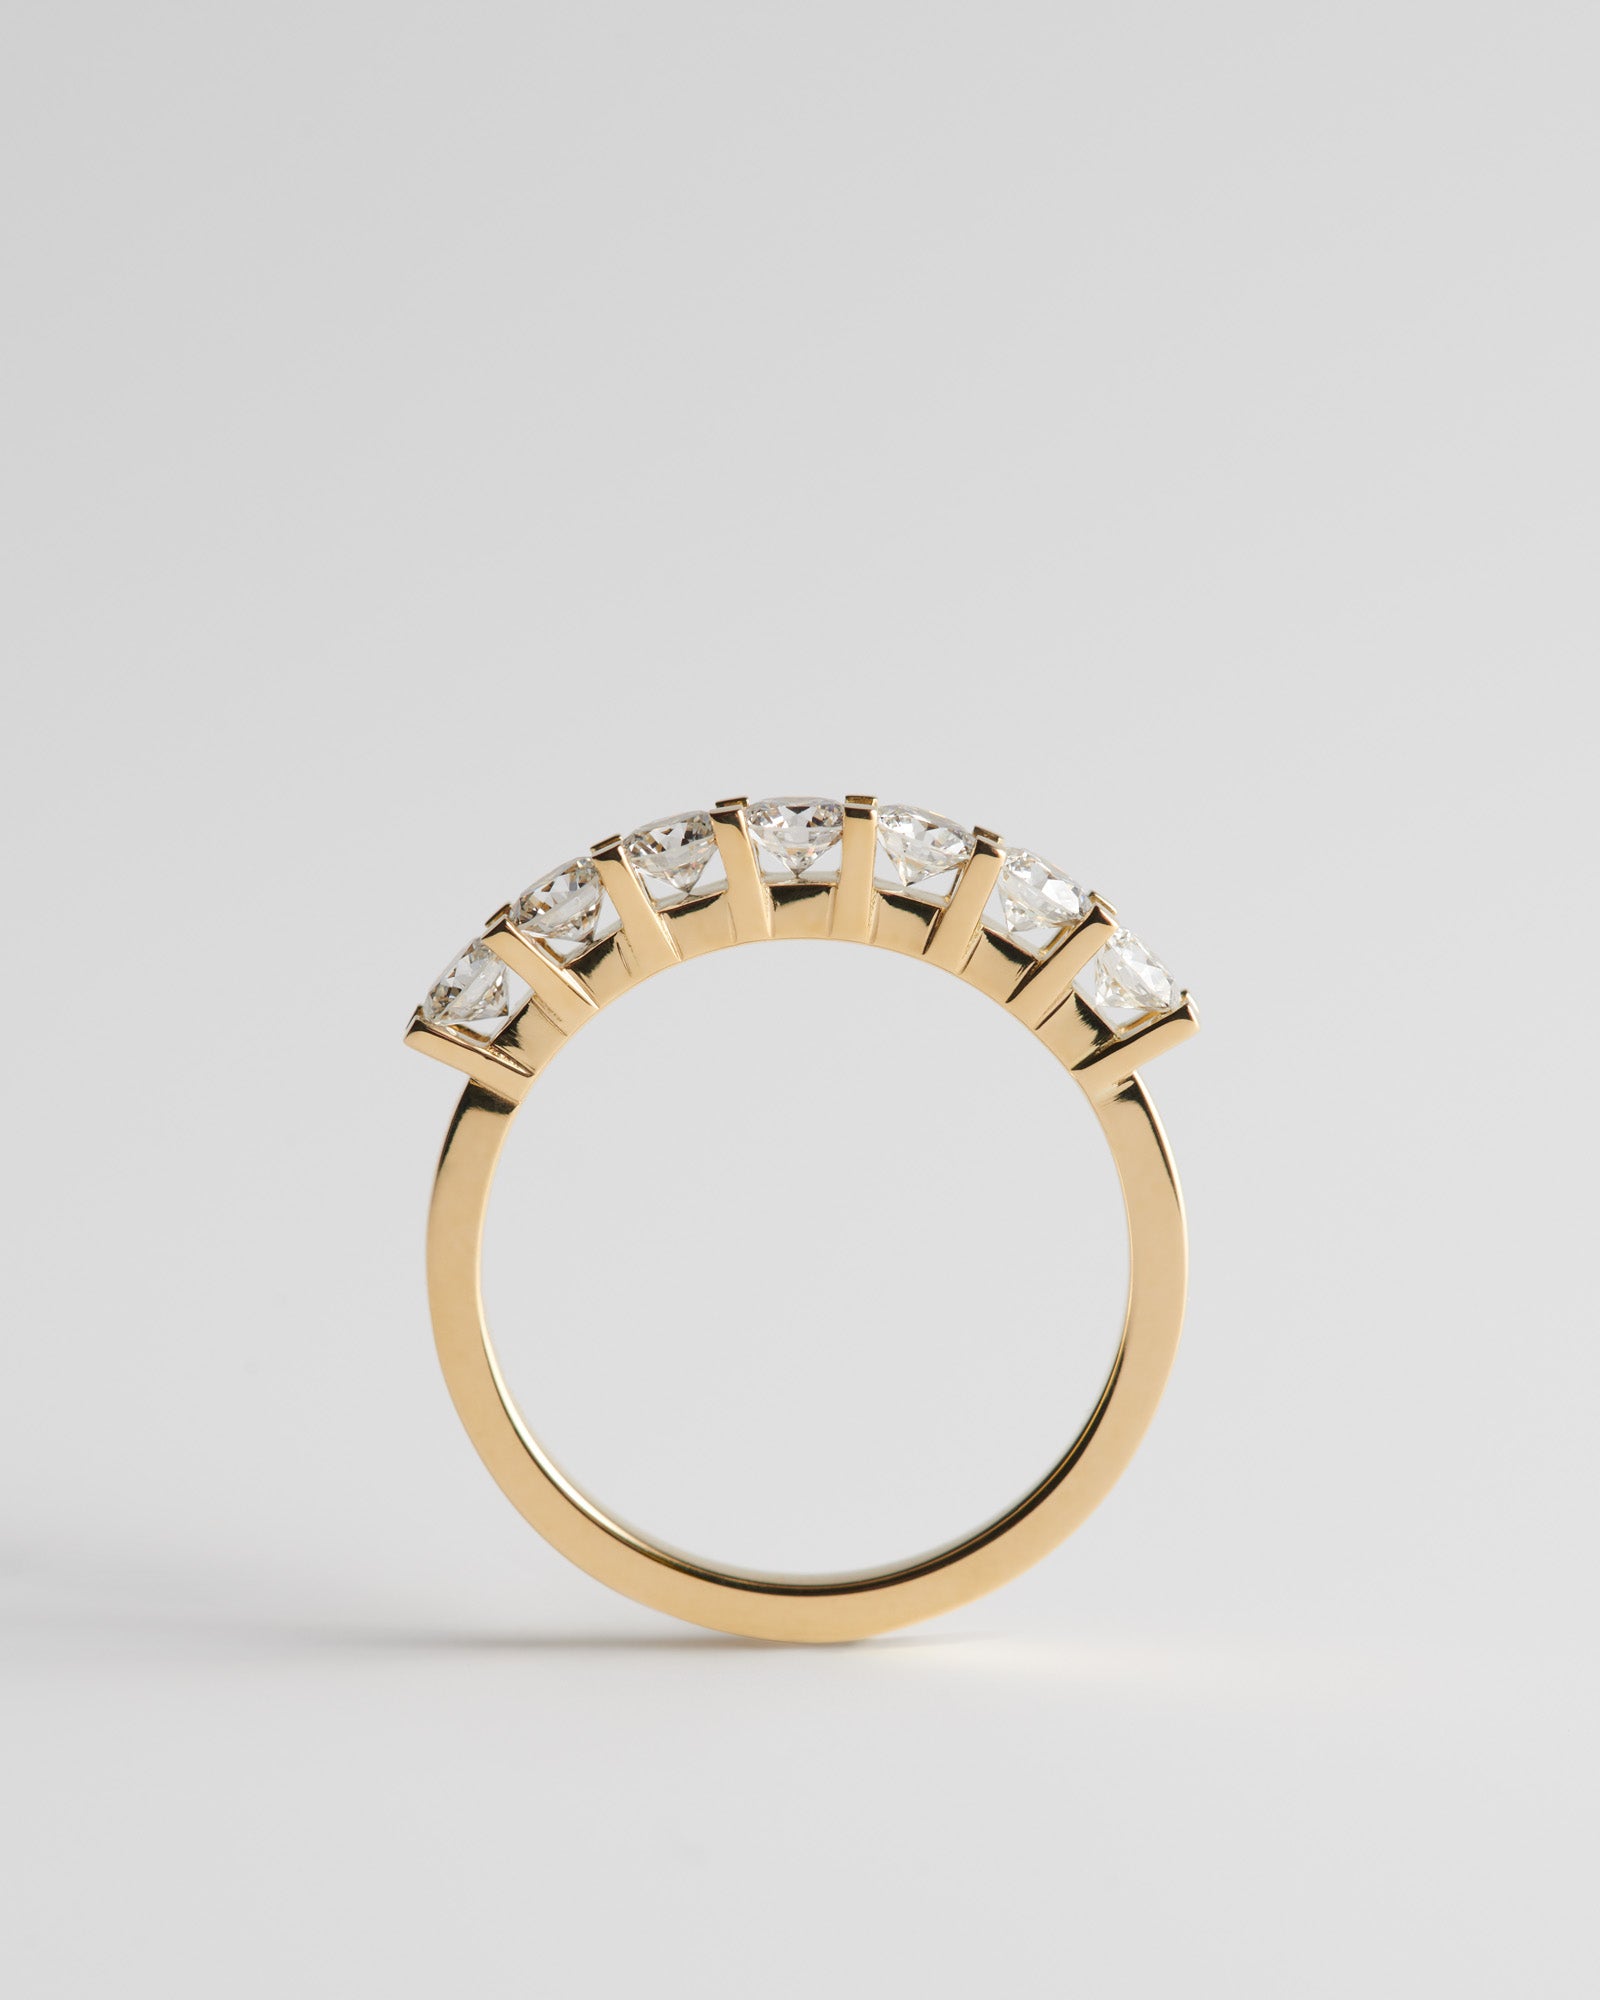 The Diamond Crest Ring